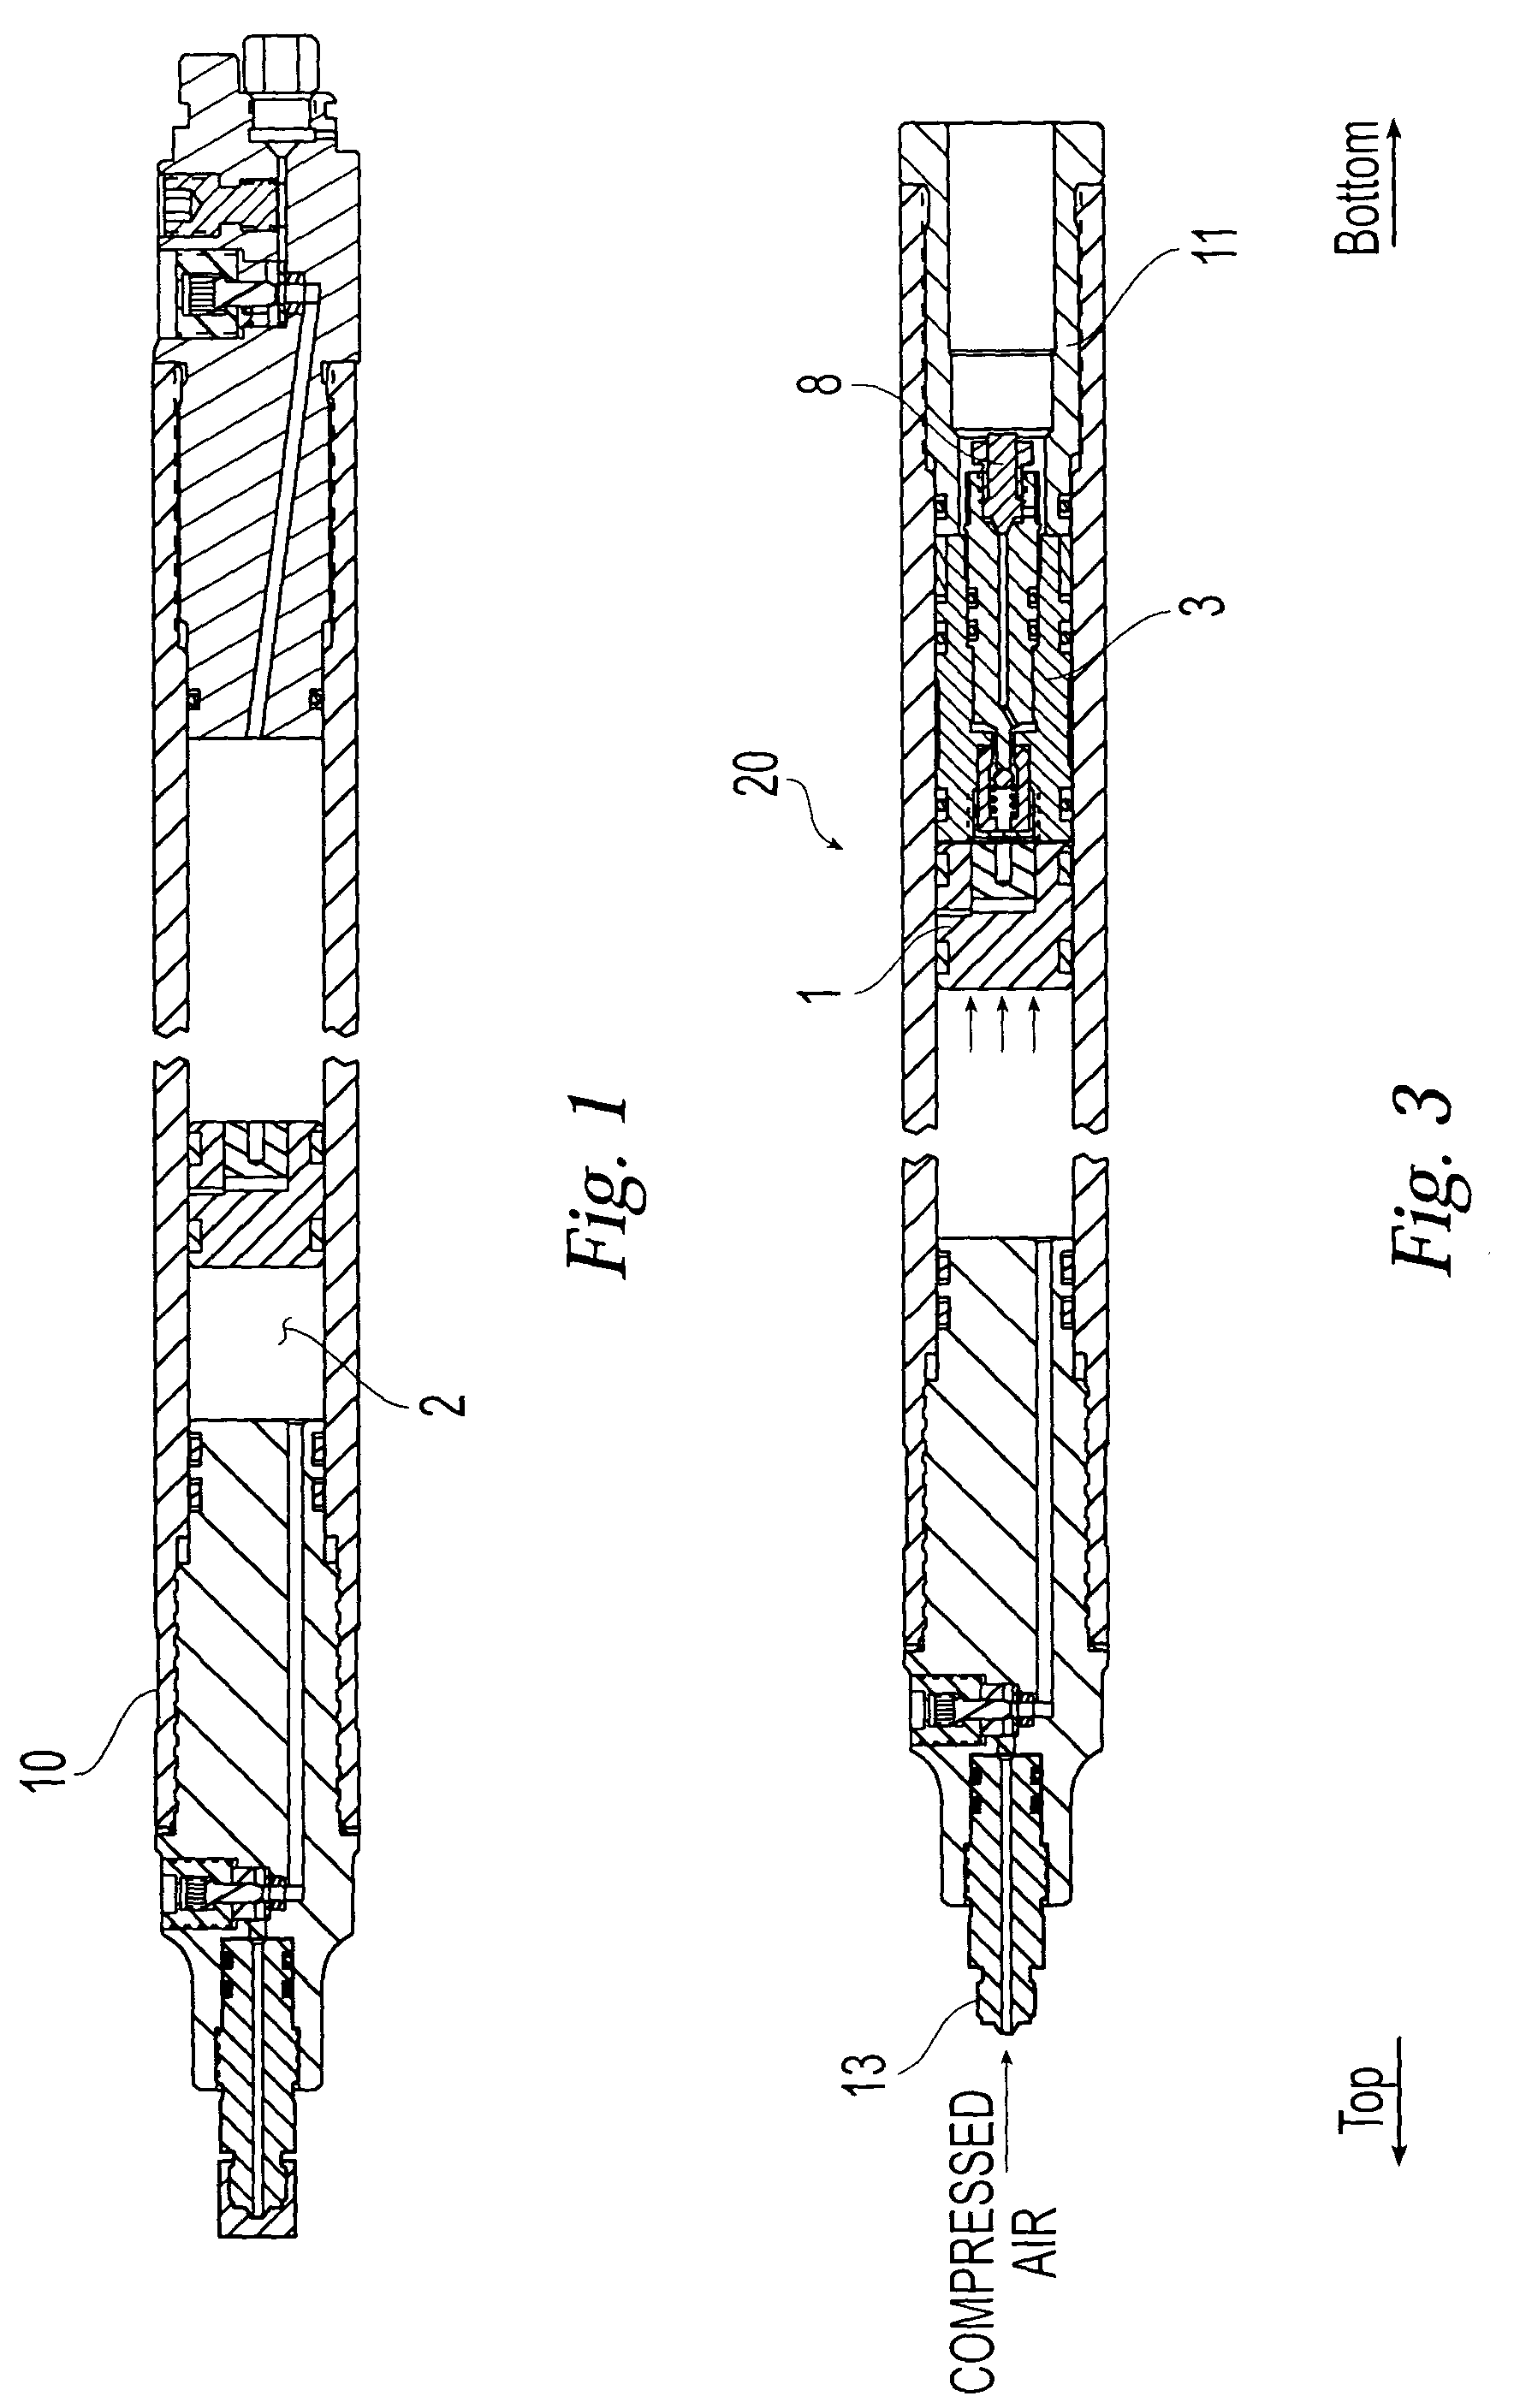 Single phase sampling apparatus and method